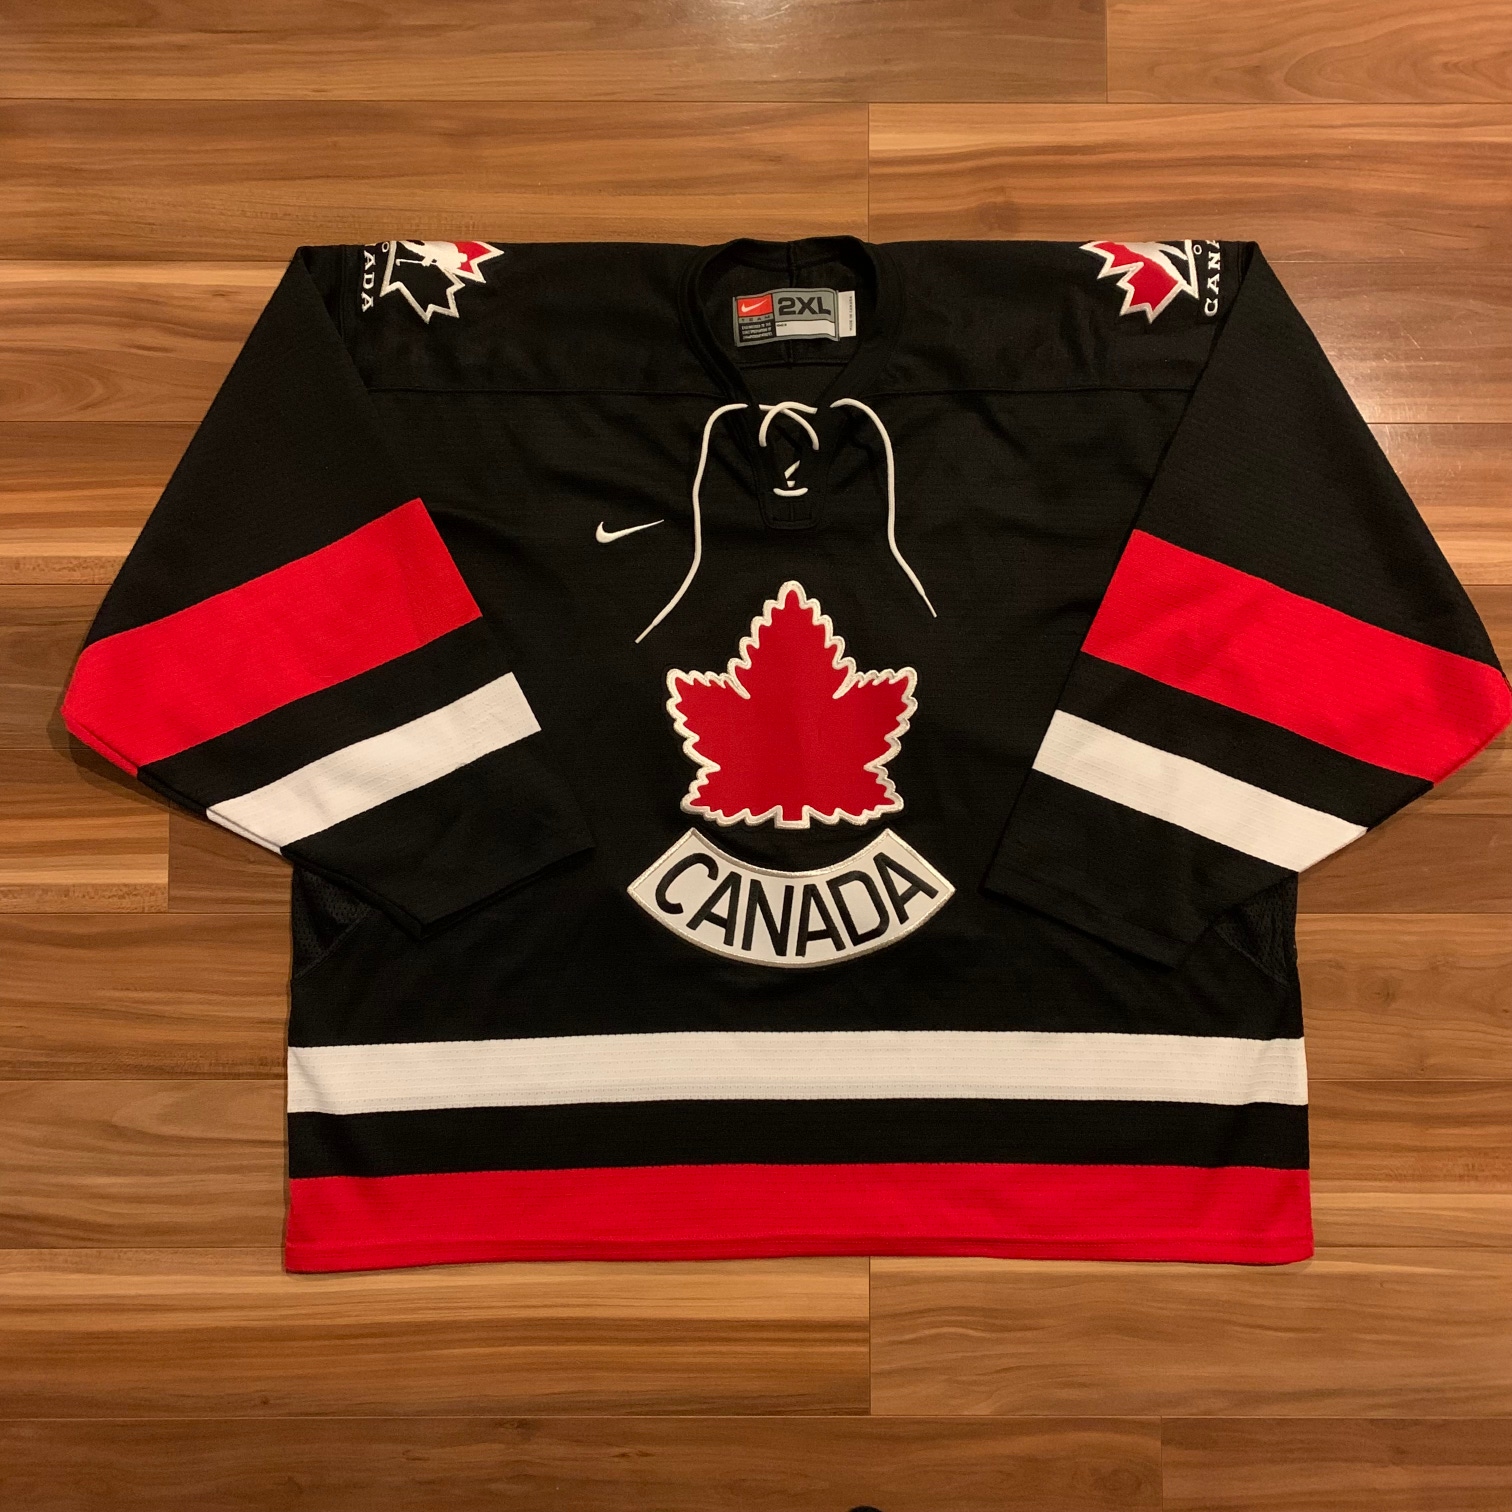 Team Canada 2004 World Cup Black XXL Adult Nike Jersey